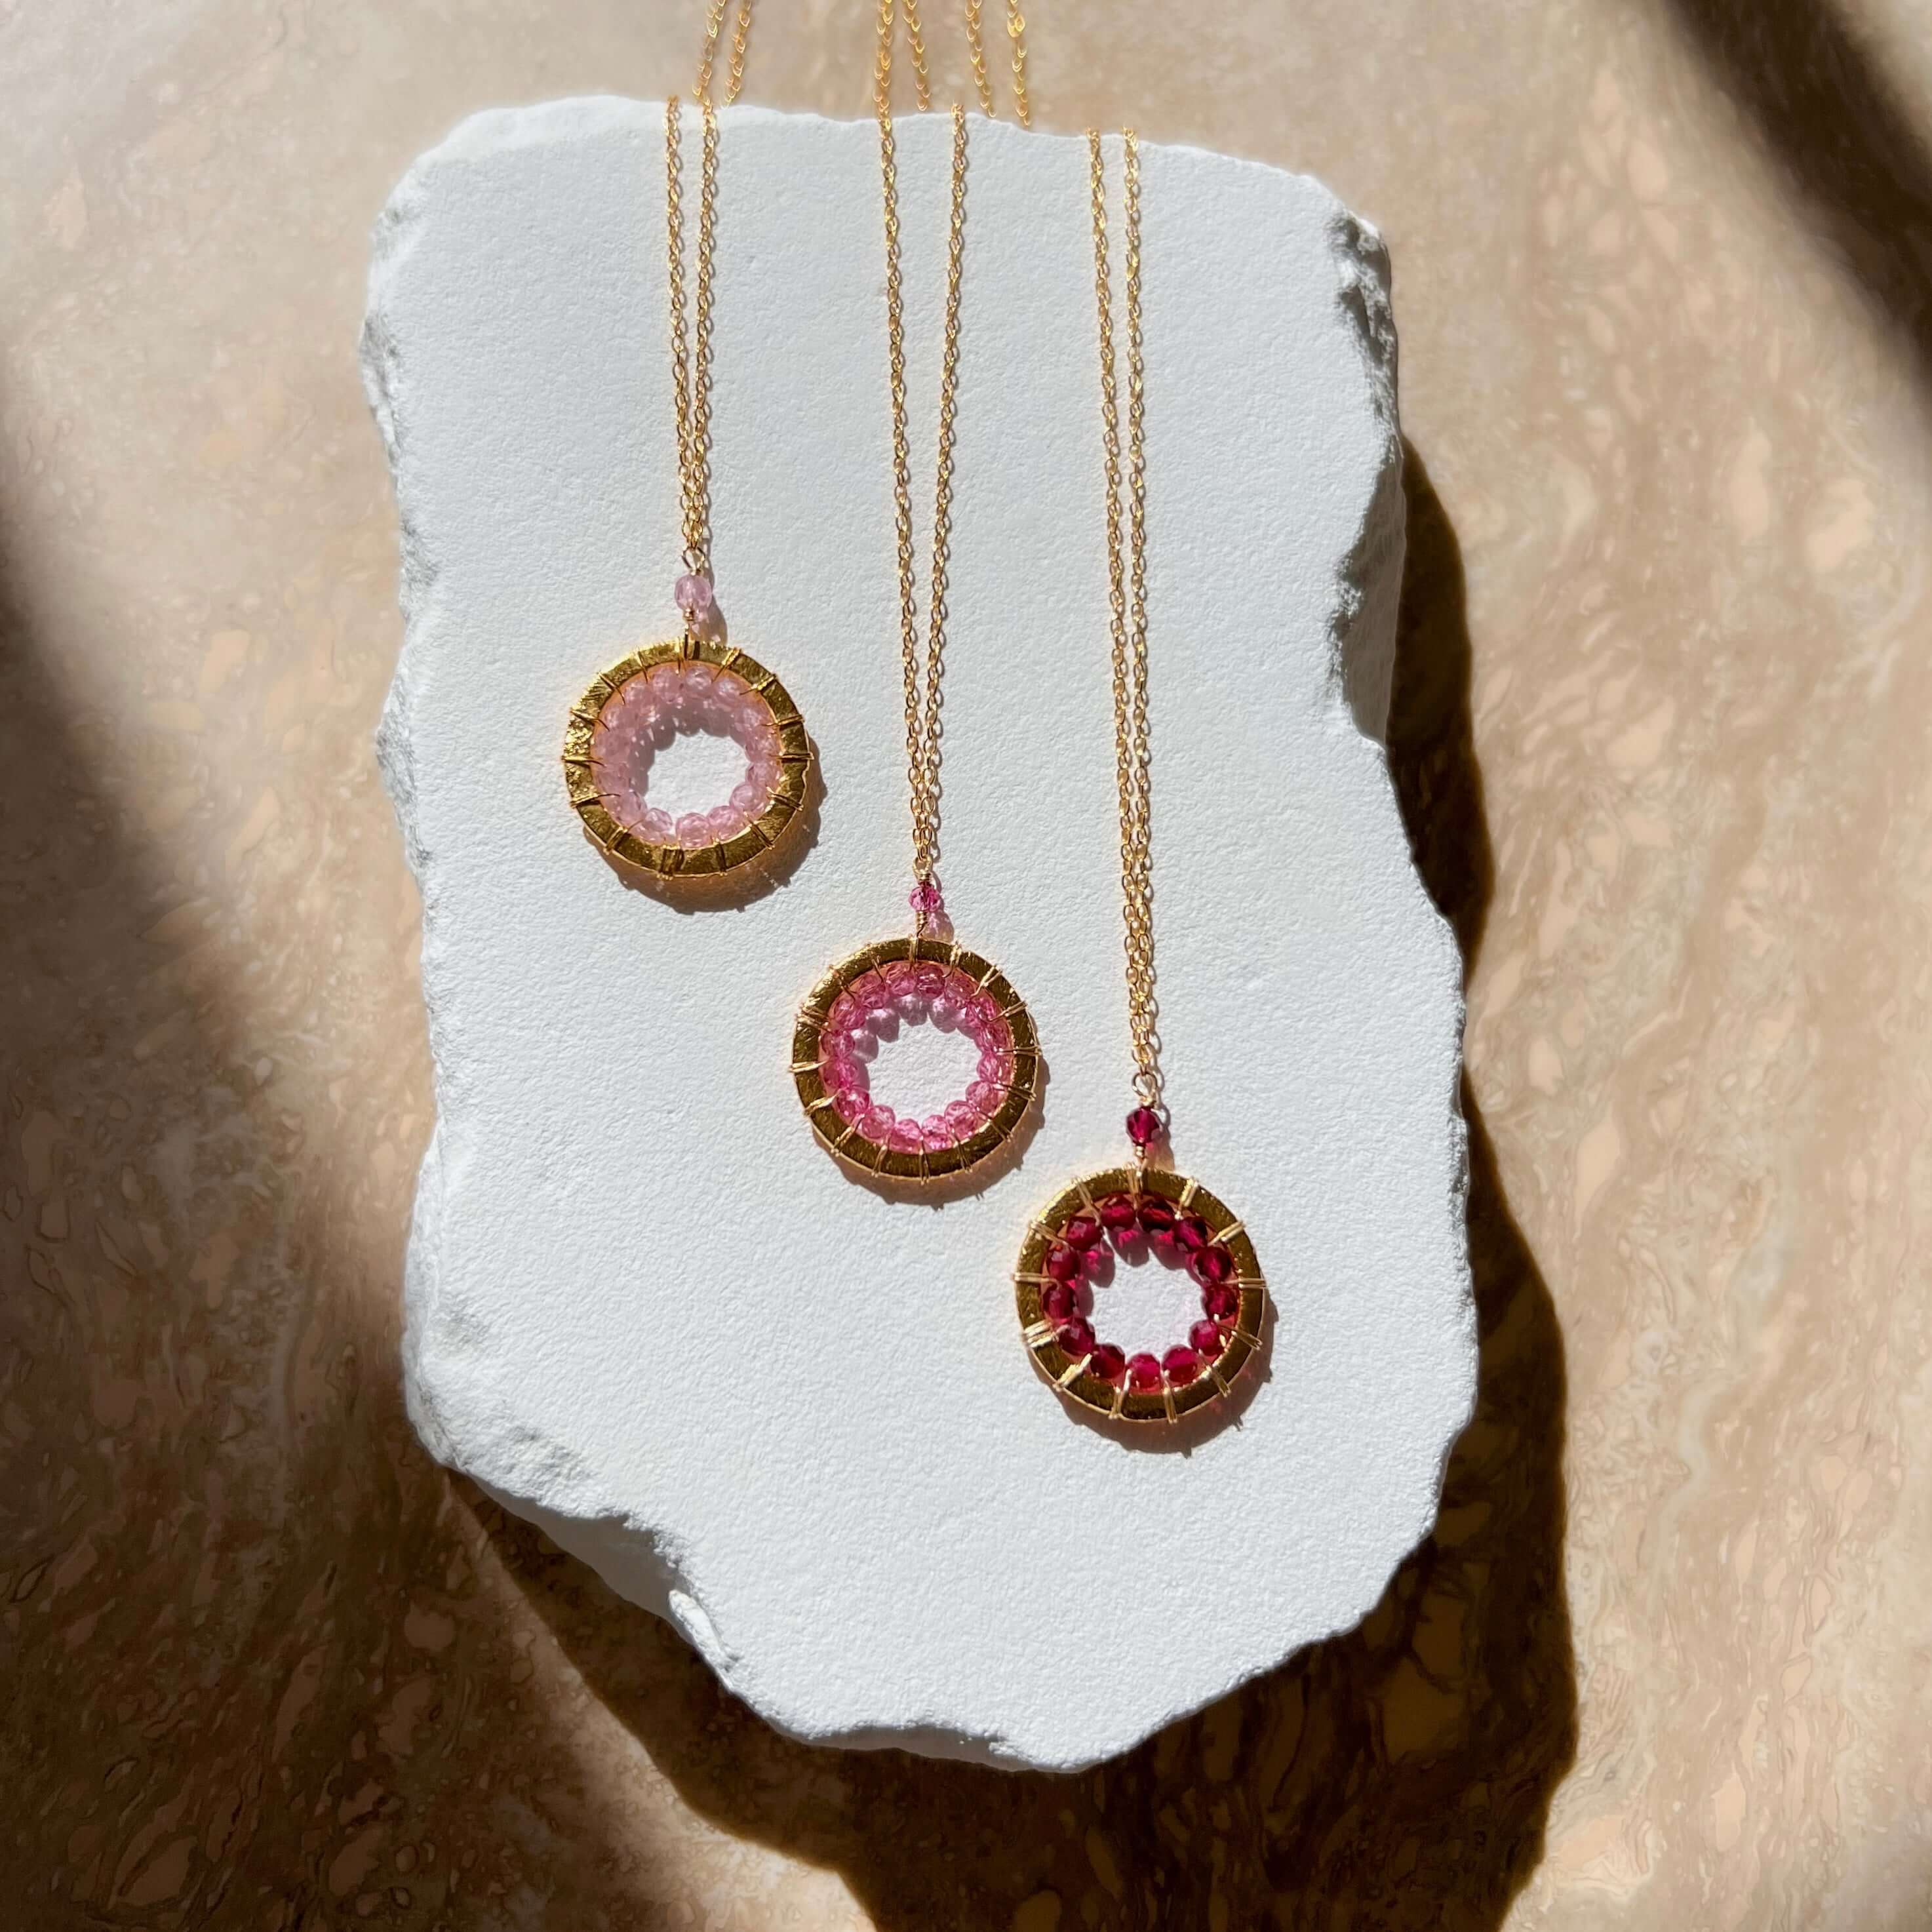 Elegant Mini Modern Circle Authentic Gemstones Gold Necklace